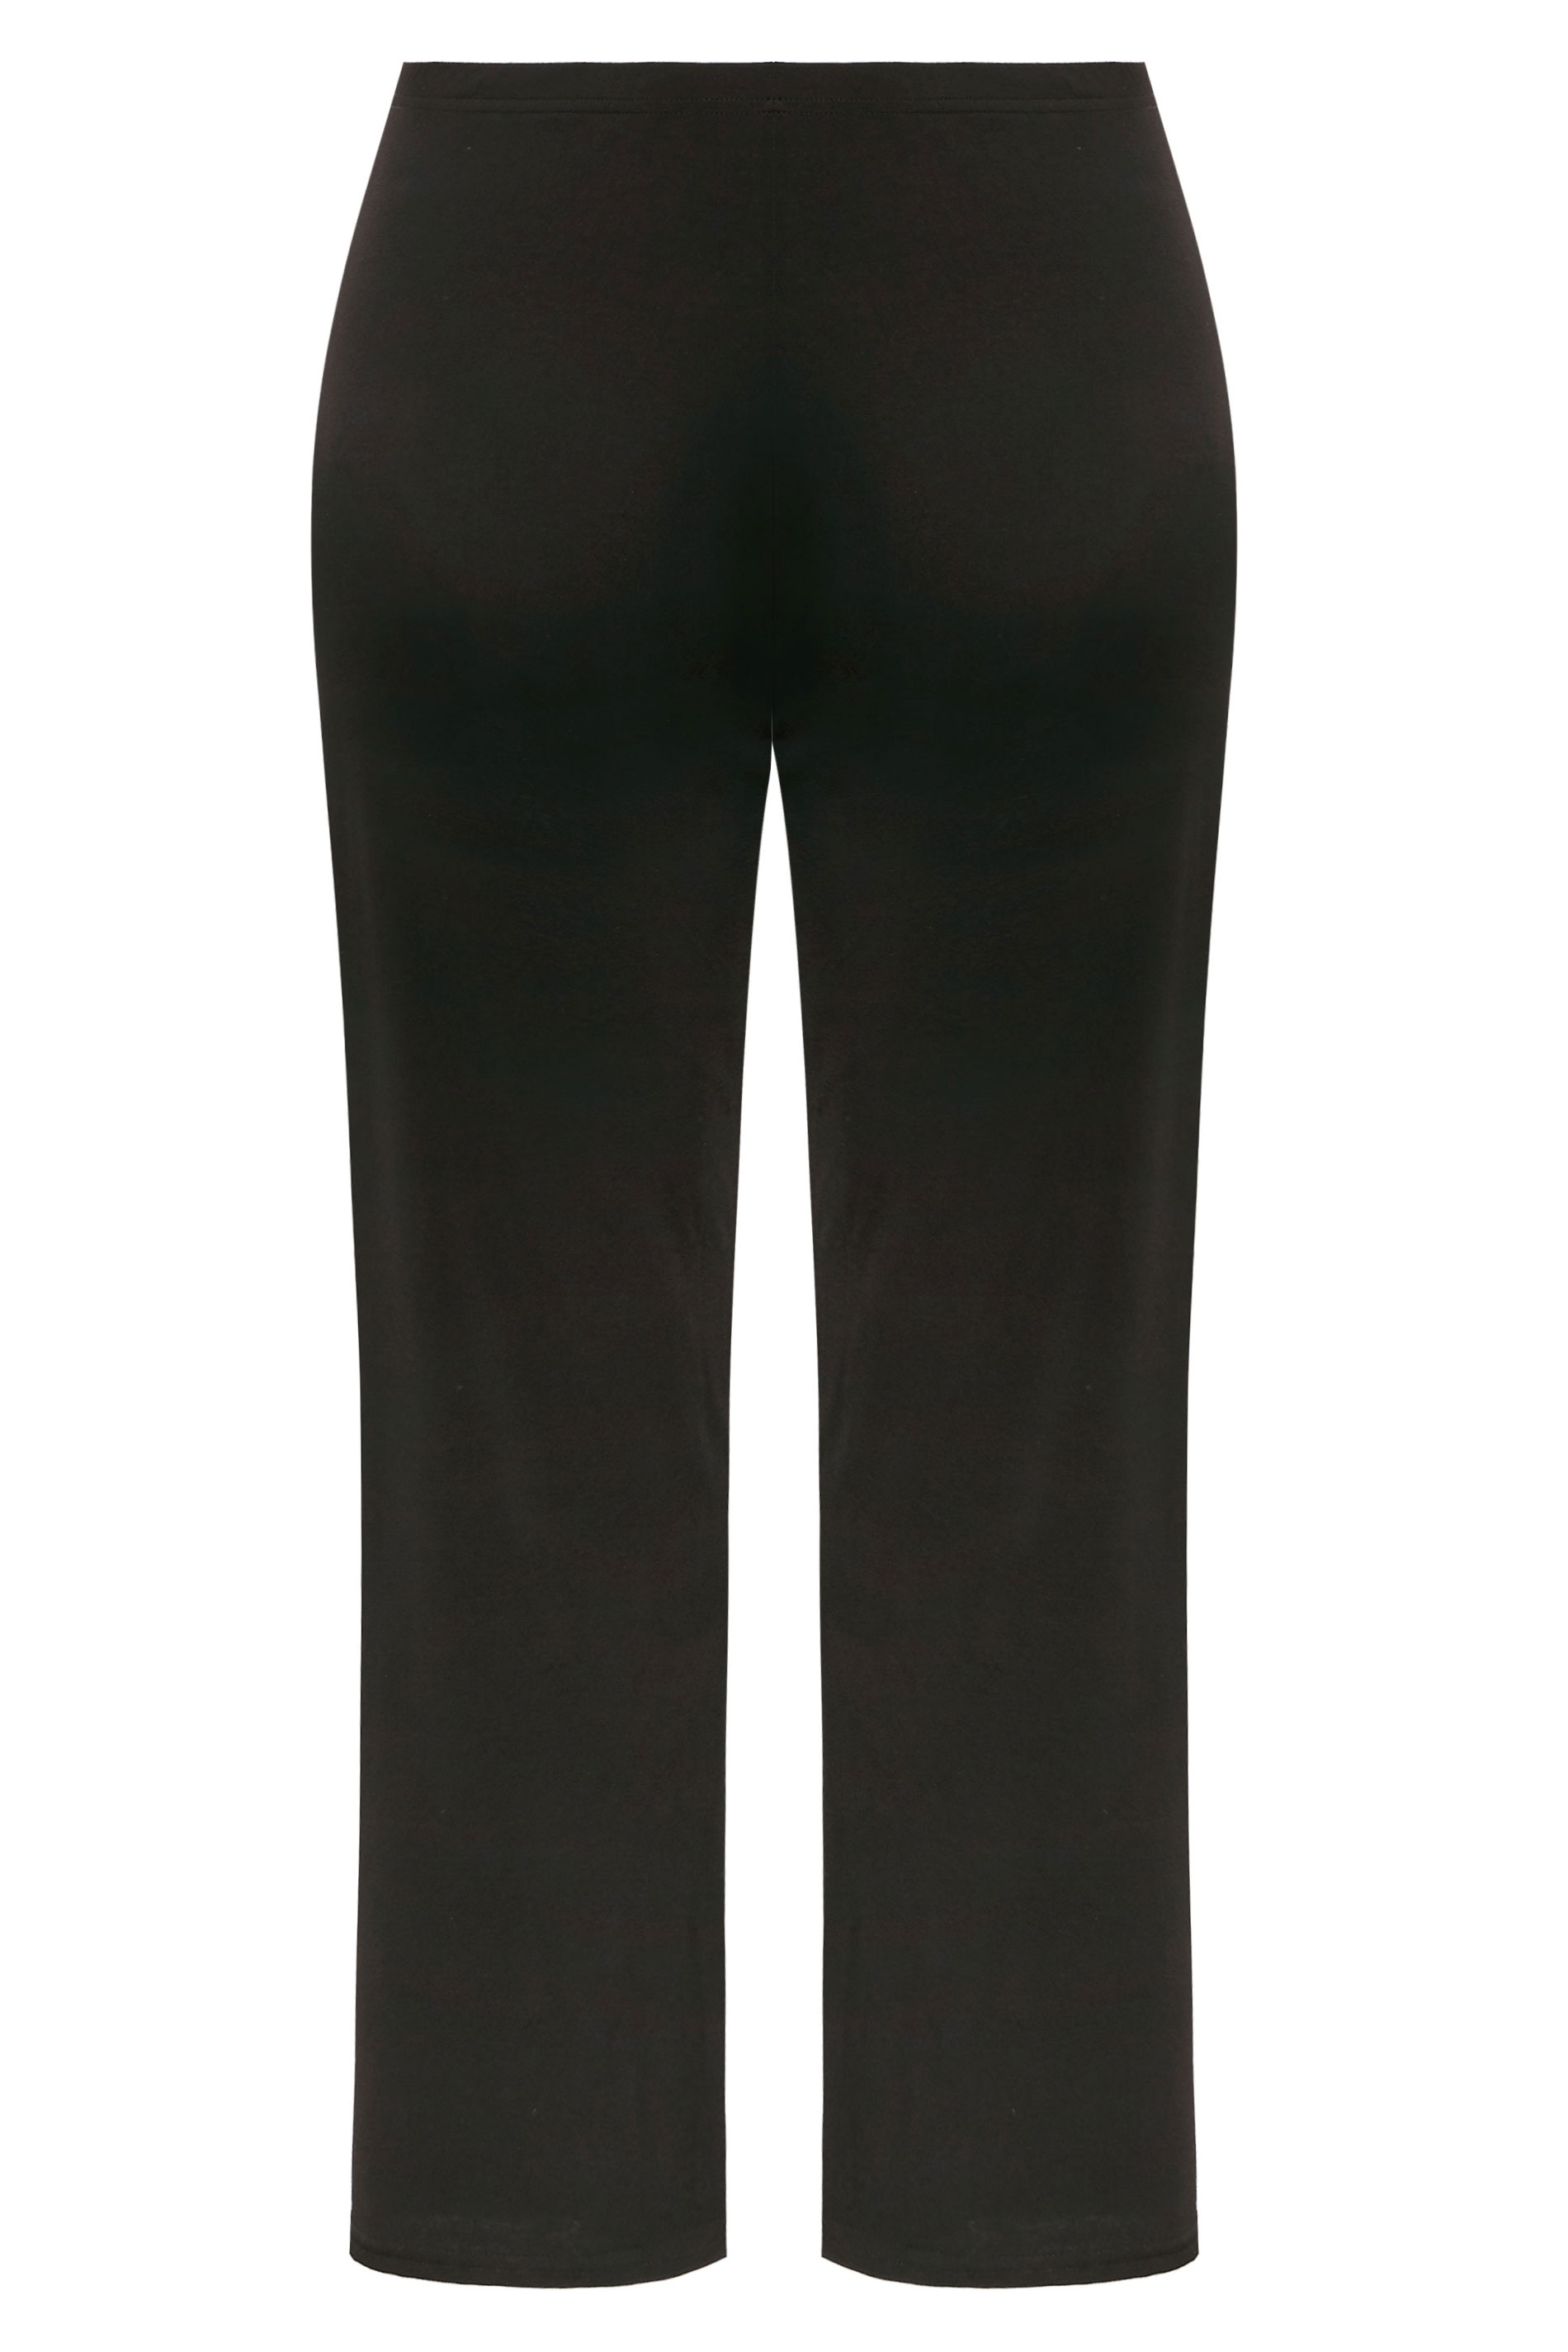 Buy Women Black Regular Fit Solid Bootcut Trousers online  Looksgudin